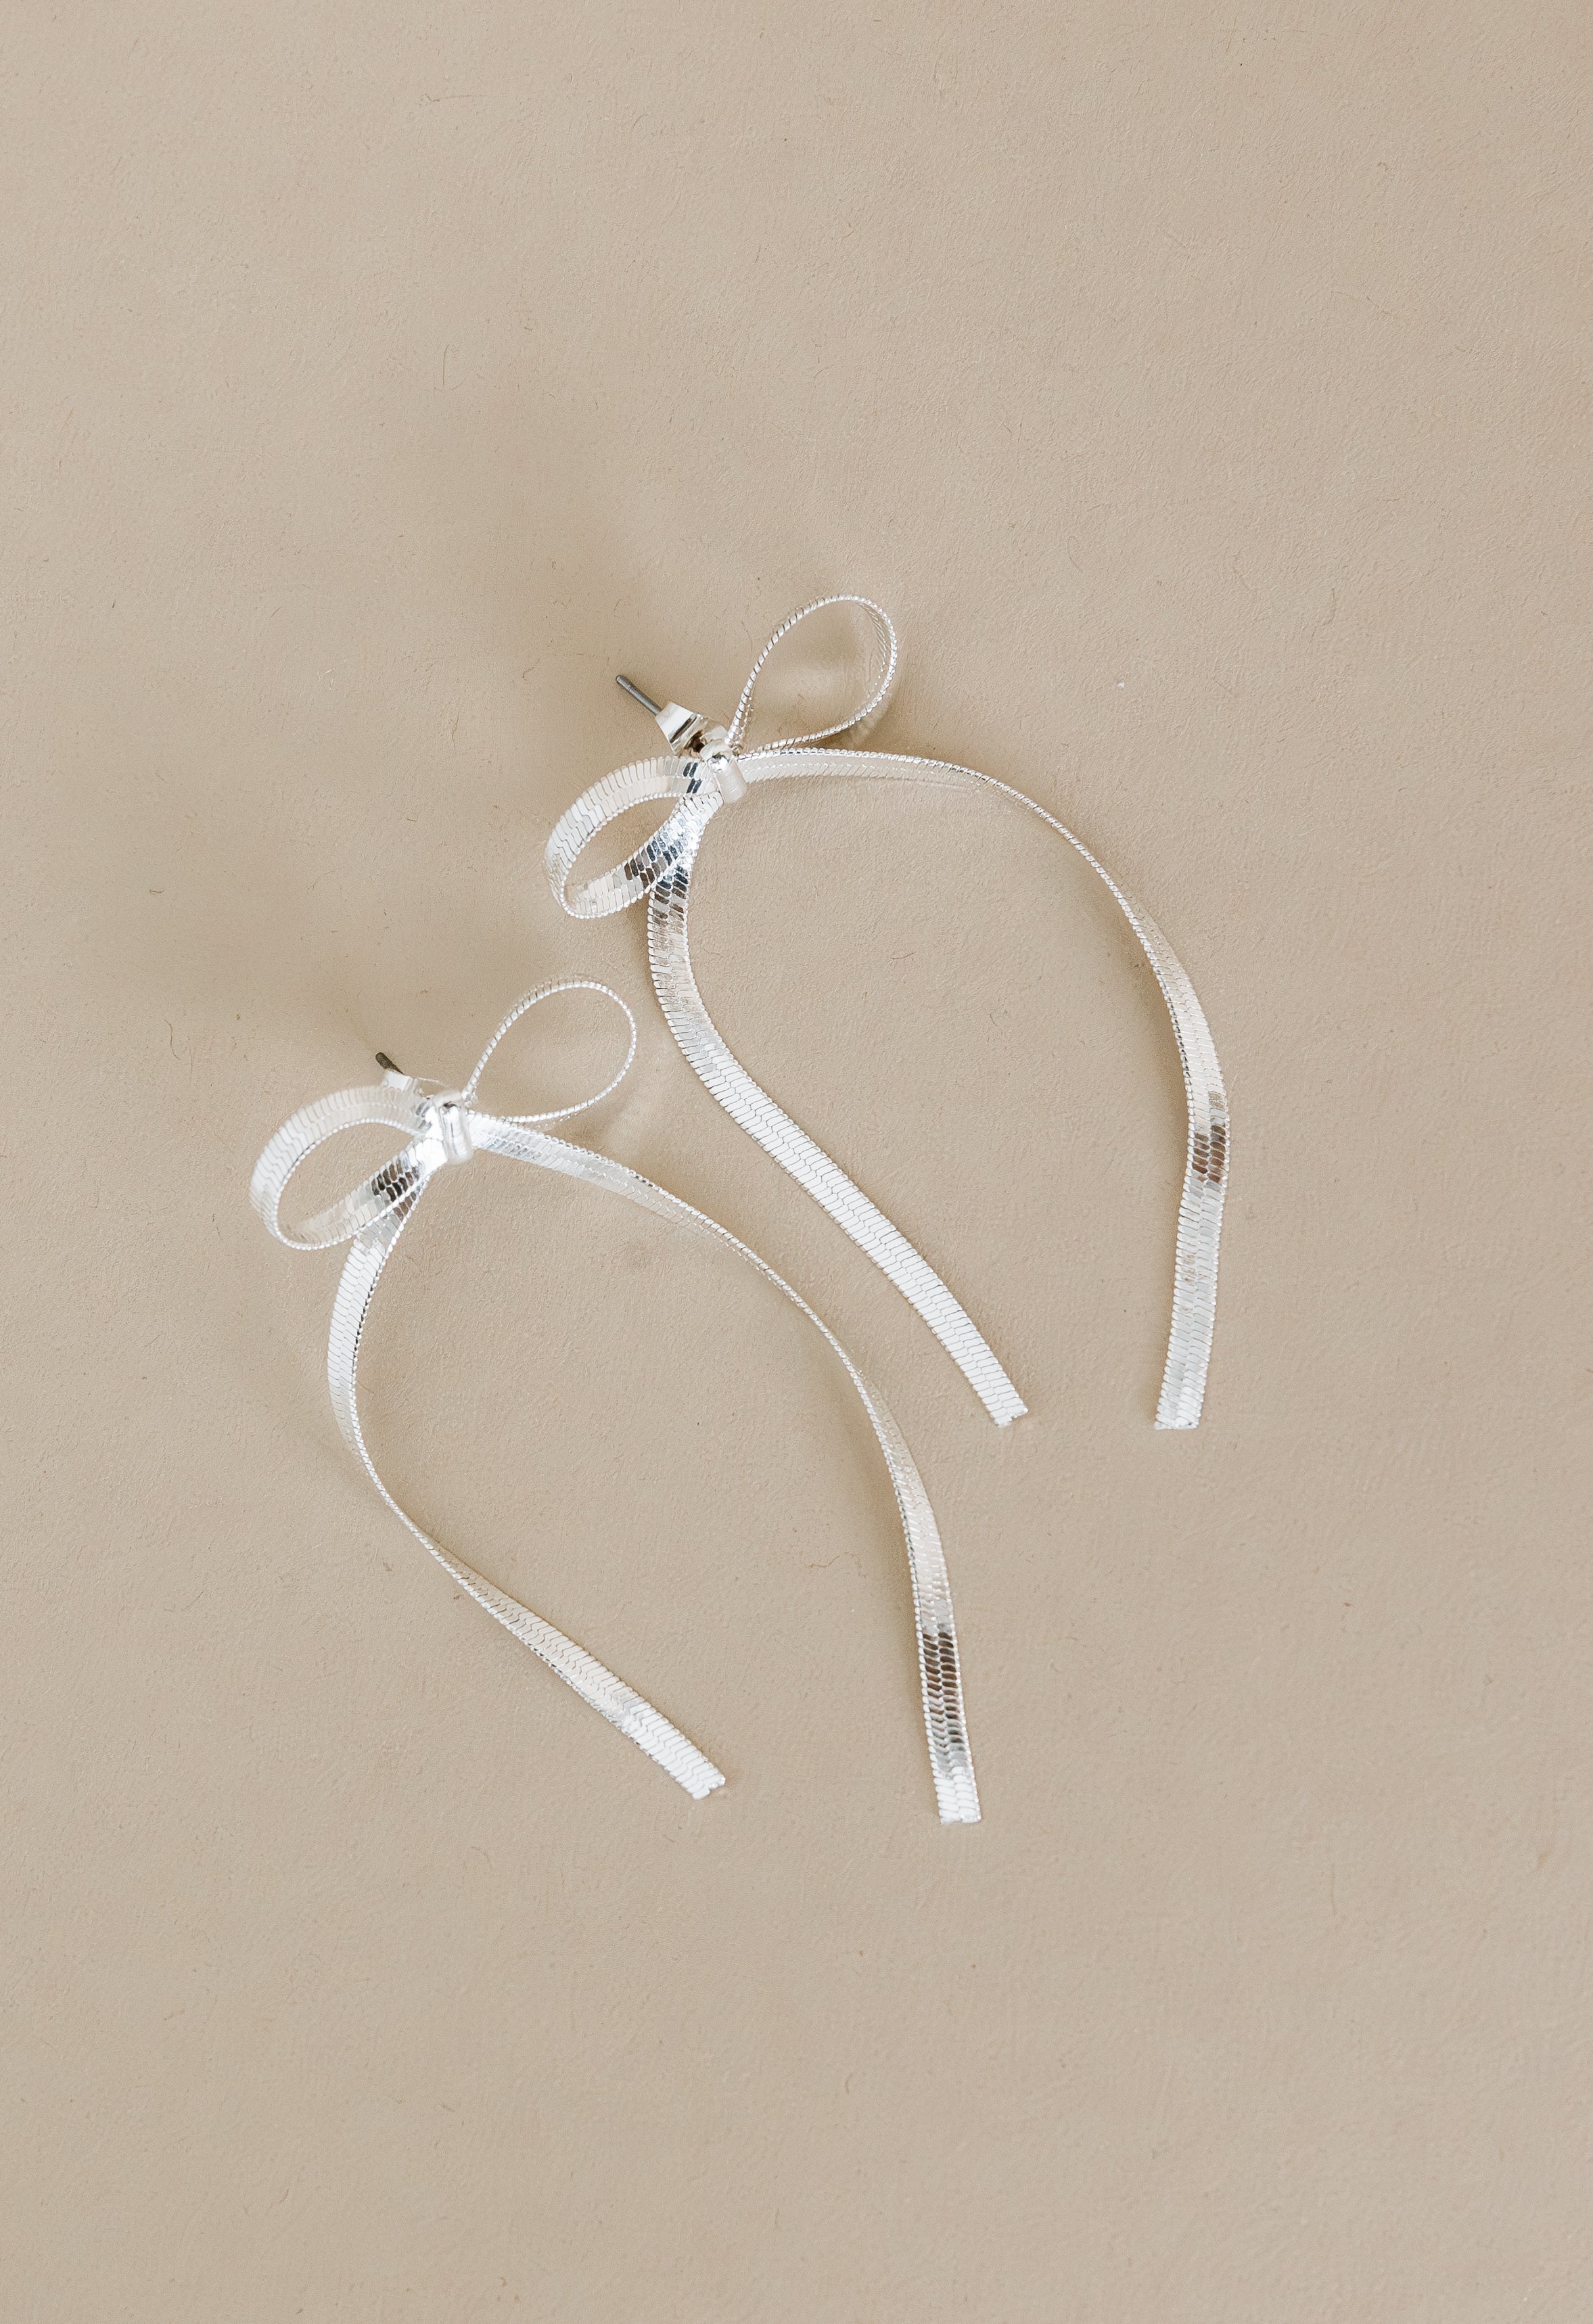 Romilly Earrings - SILVER - willows clothing Earrings